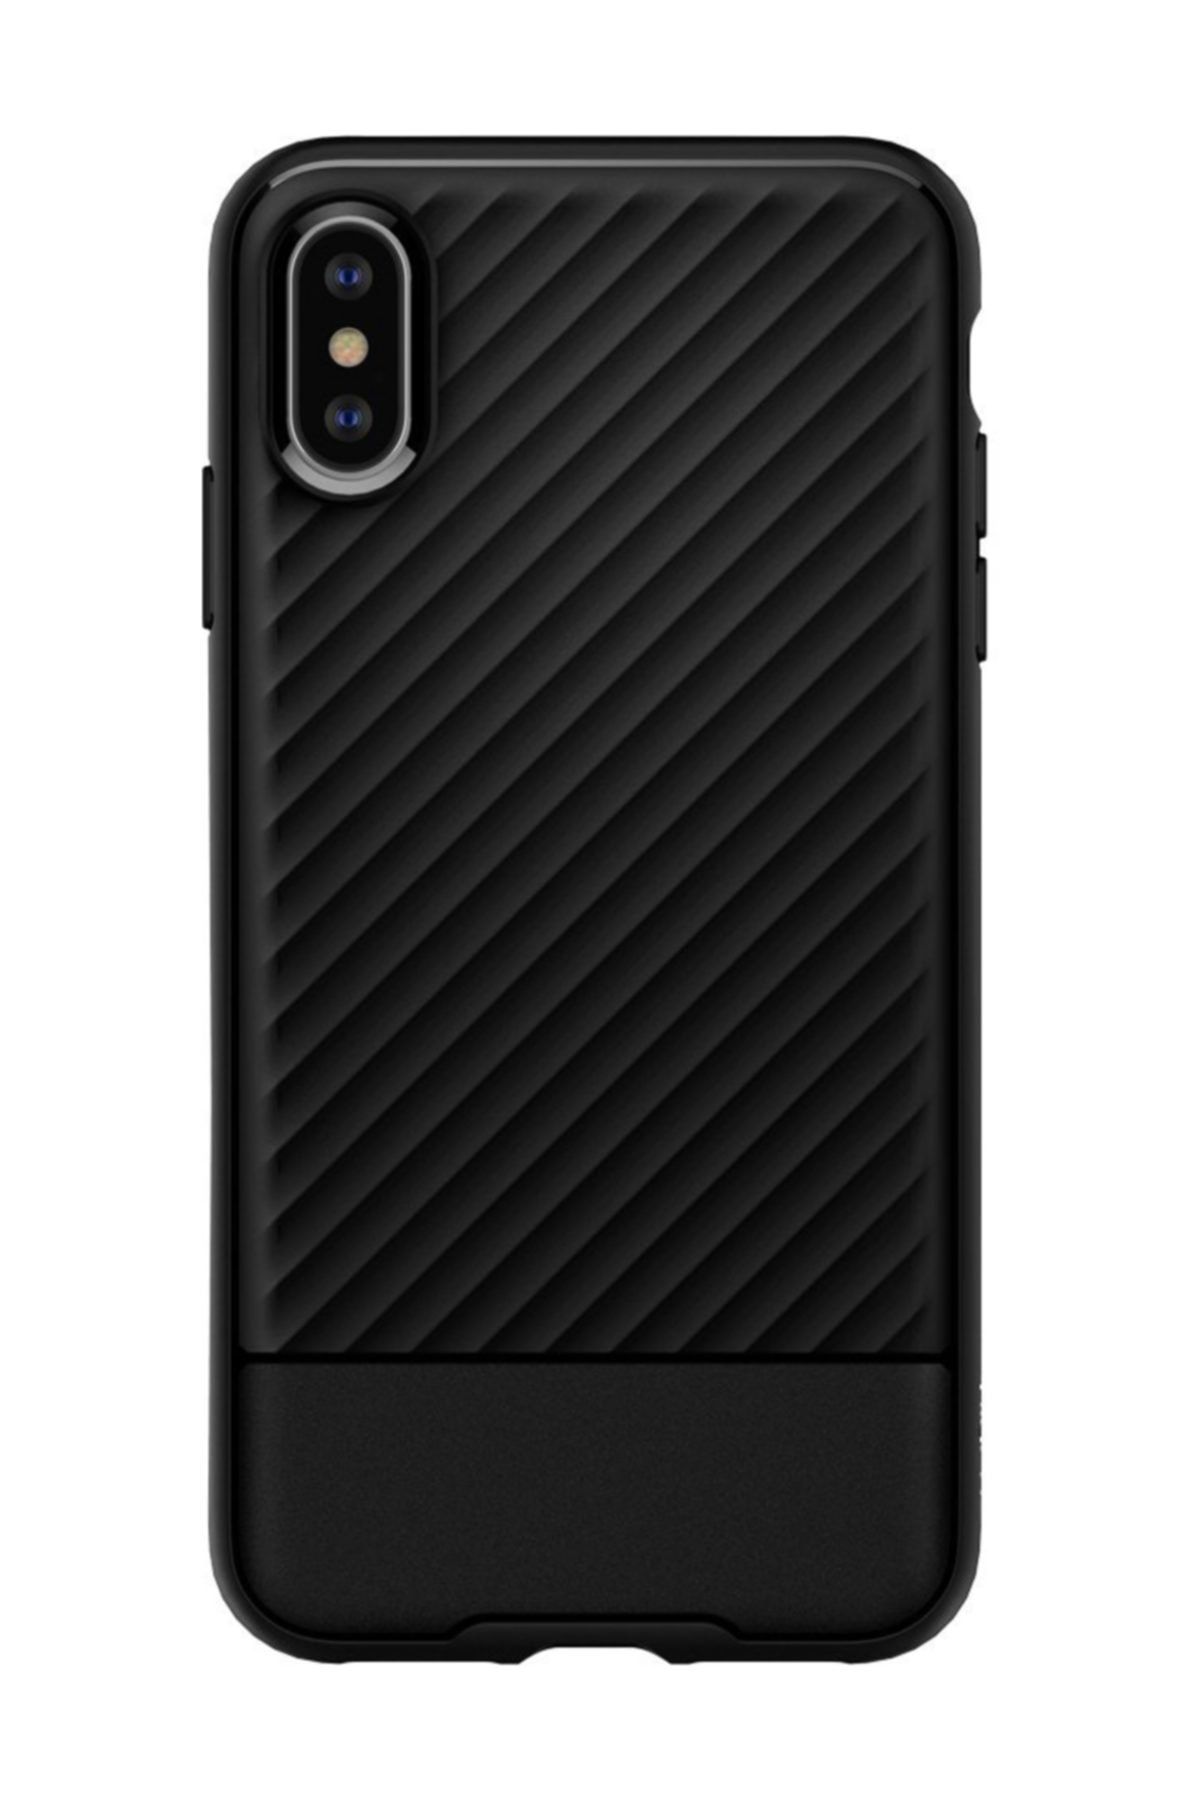 Spigen Iphone Xs / Iphone X Kılıf Core Armor Black - 063cs24941